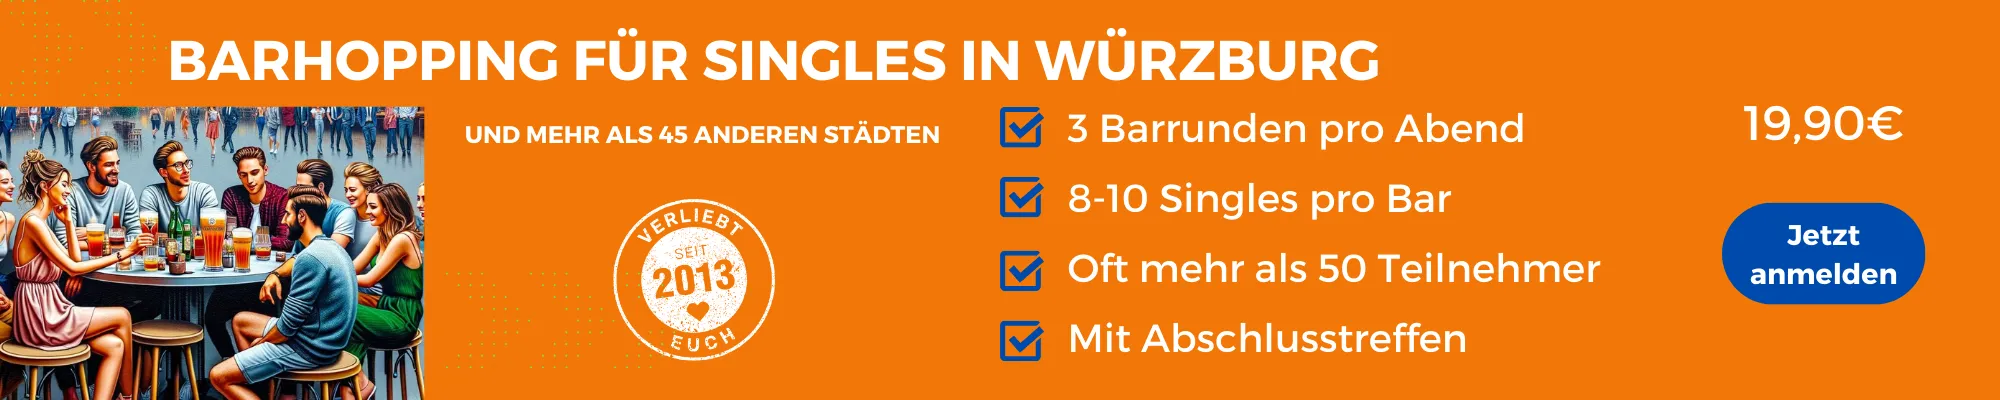 Face to Face Würzburg, Barhopping für Singles in Würzburg